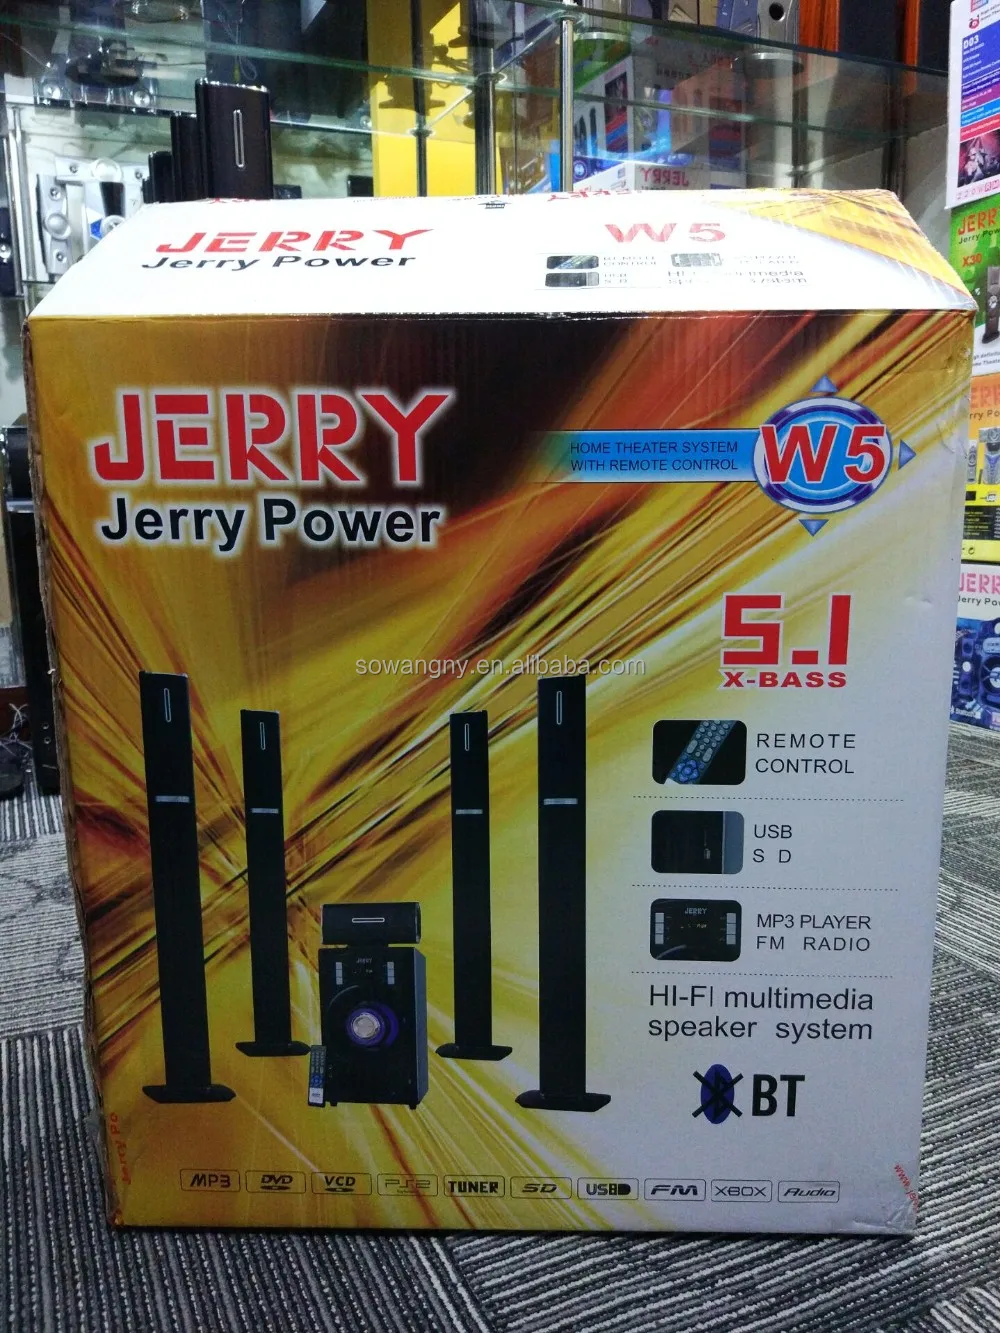 
Jerry digital wooden 5.1 home theatre sound speaker system 